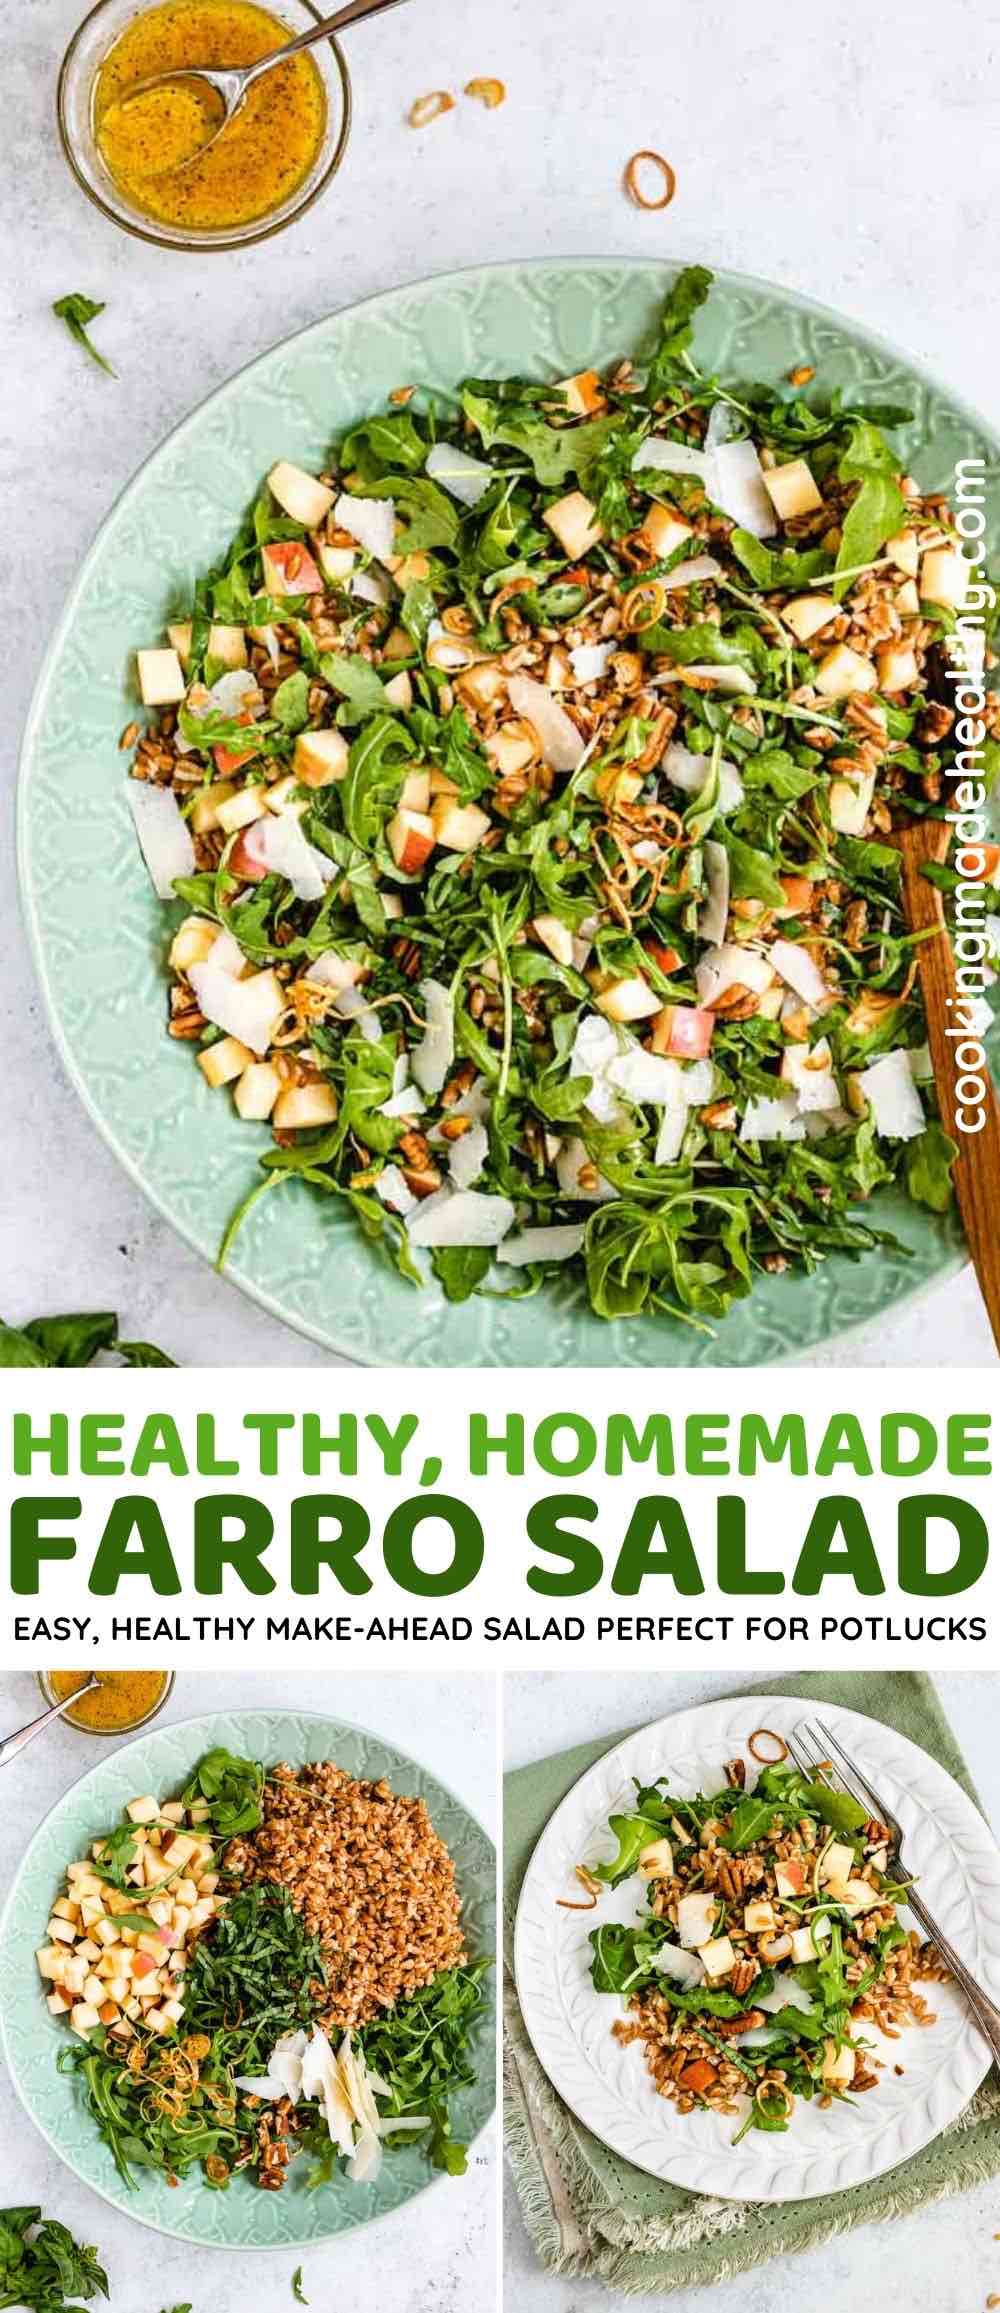 Farro Salad collage